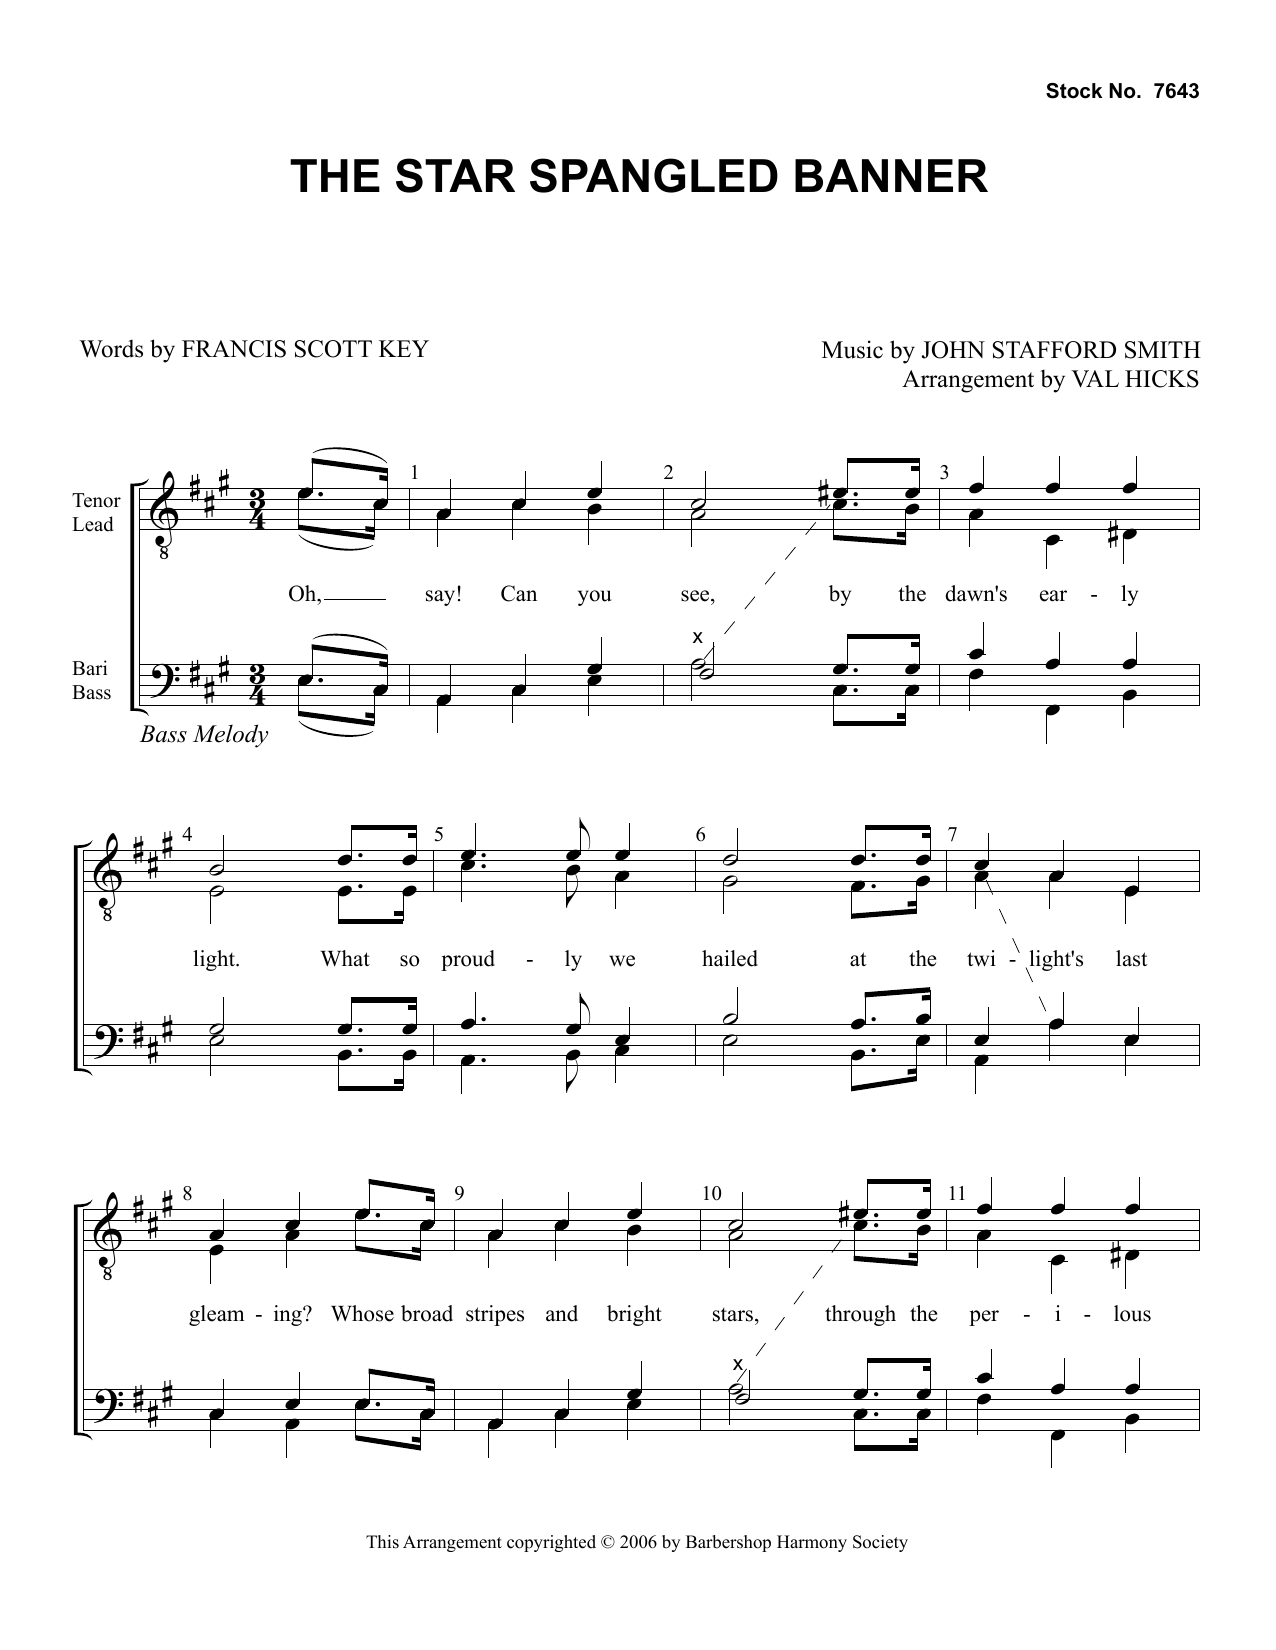 Francis Scott Key Star Spangled Banner (arr. Val Hicks) sheet music notes and chords arranged for TTBB Choir